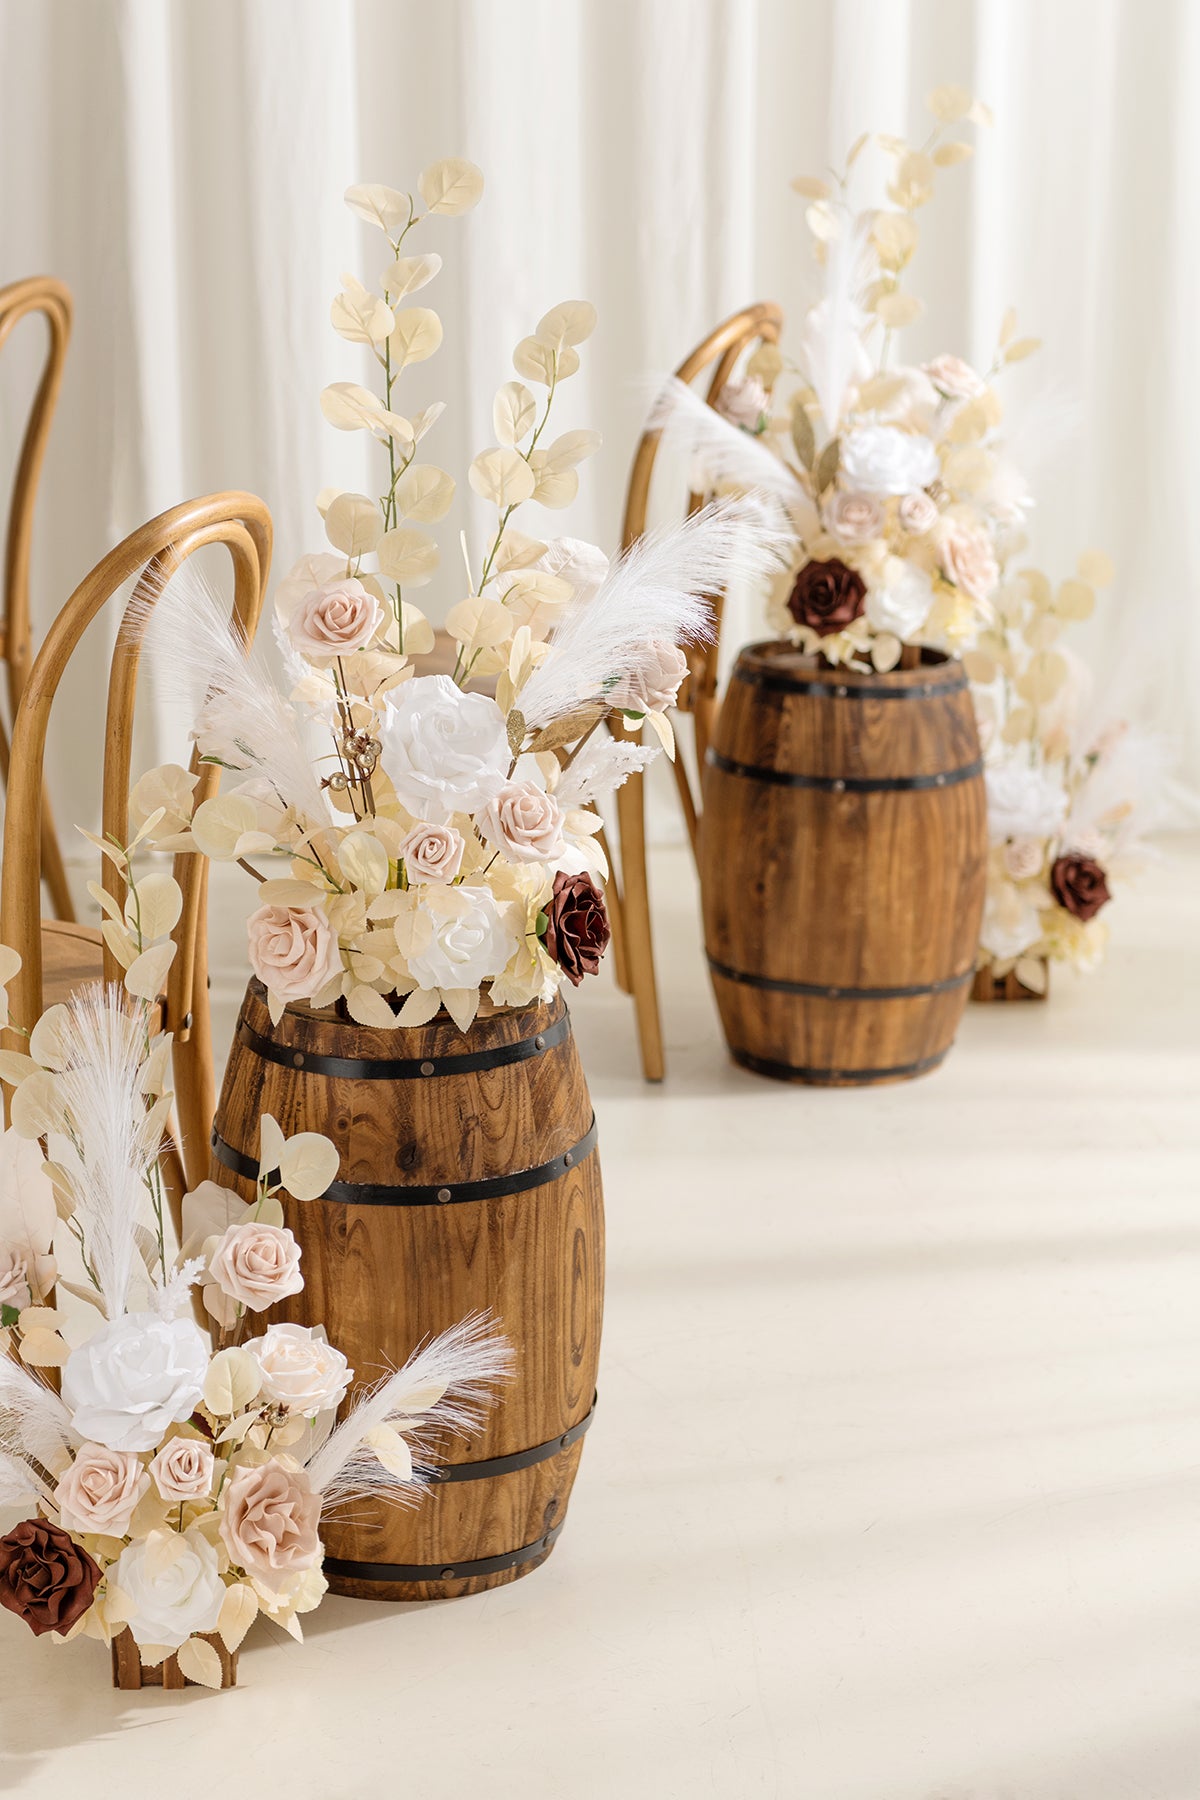 Wedding Aisle Runner Flower Arrangement in White & Beige